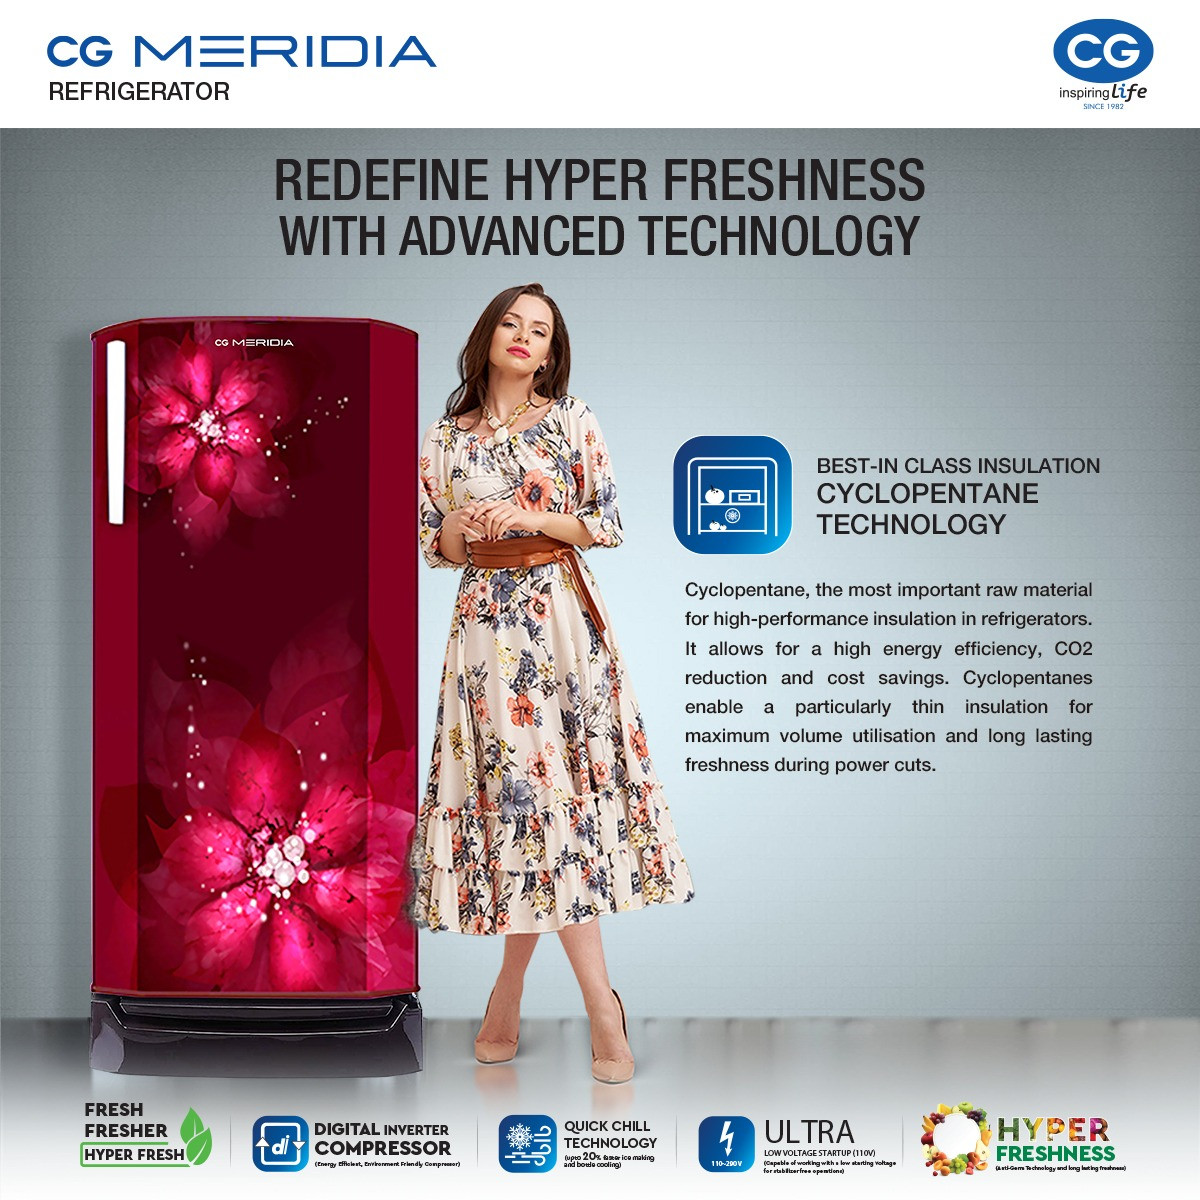 ‘CG Meridia’ premium fridge in the market from today